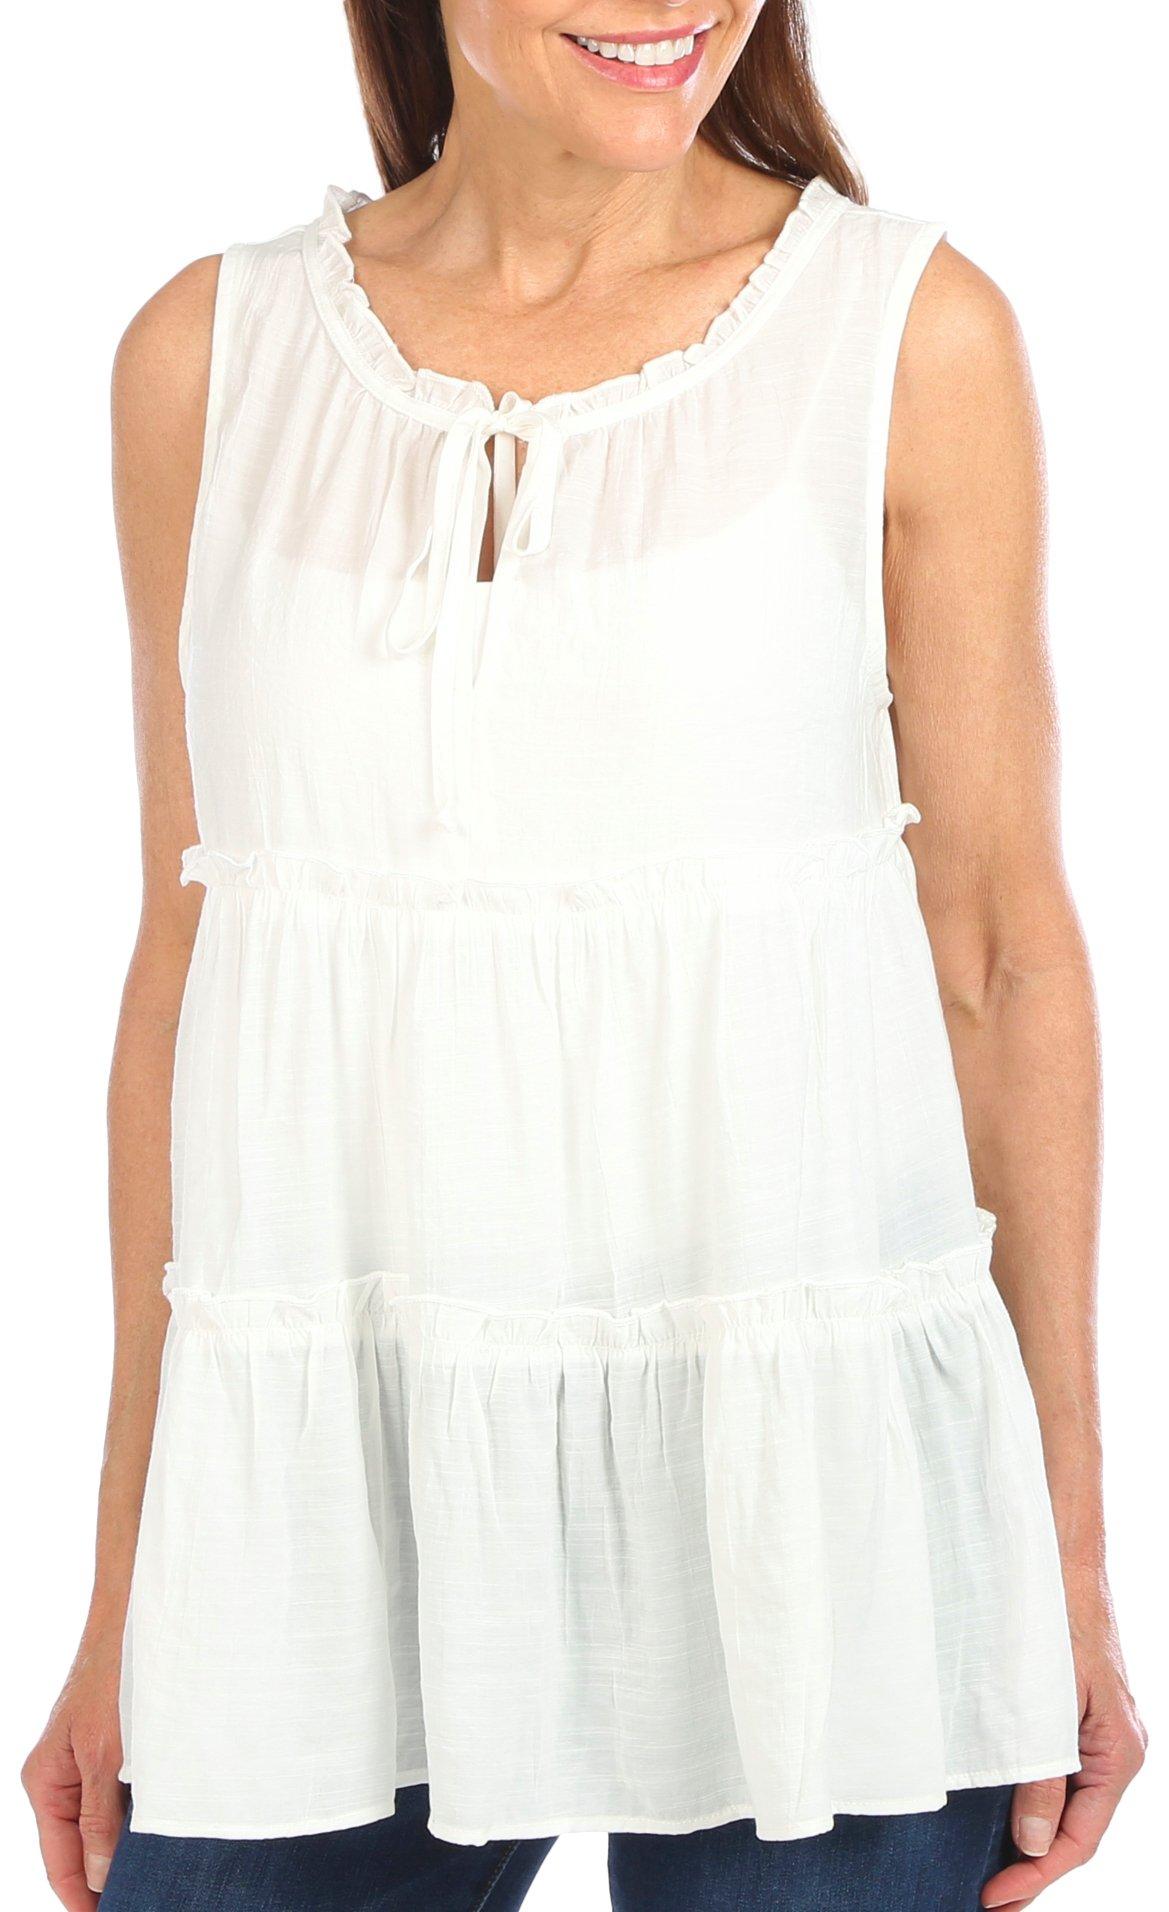 REEL LEGENDS Women's Size M Sleeveless Shirt MARINER BERRY MOTION NEW